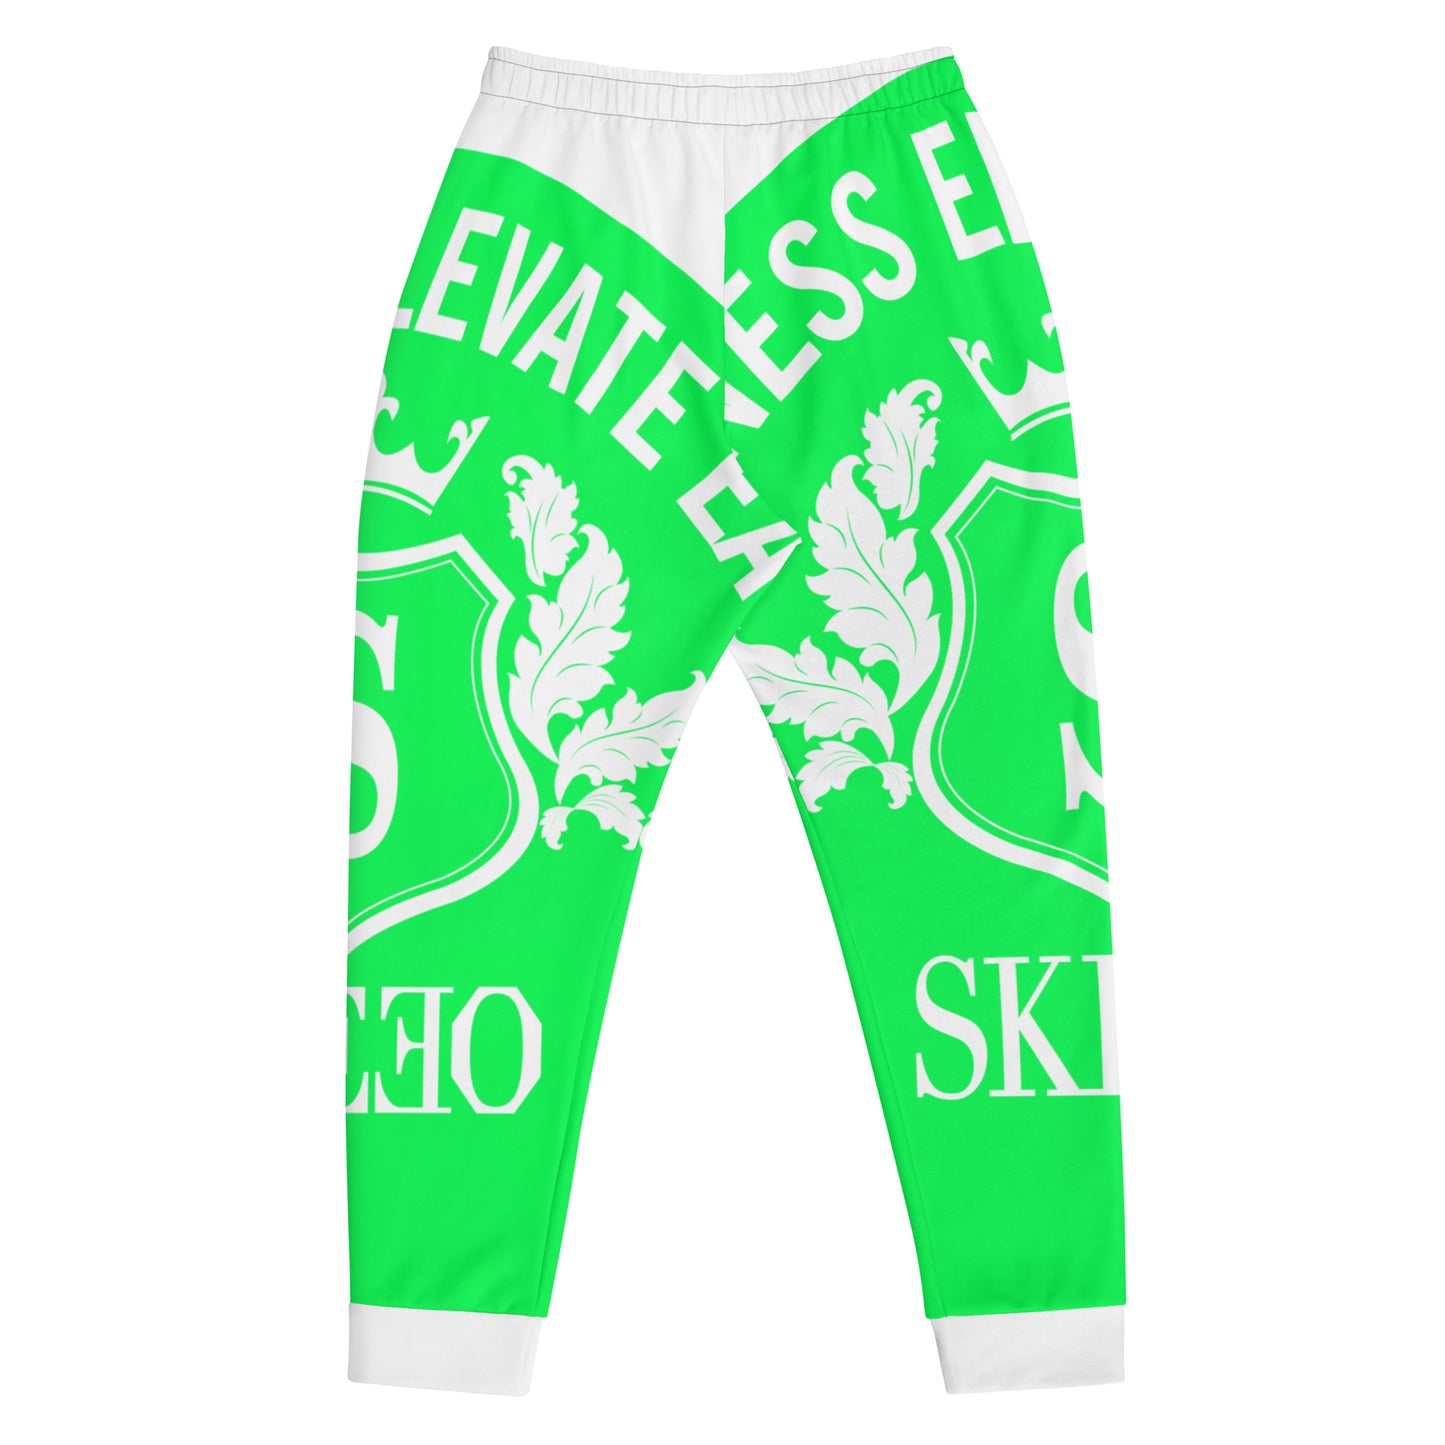 SK Neon Green Joggers